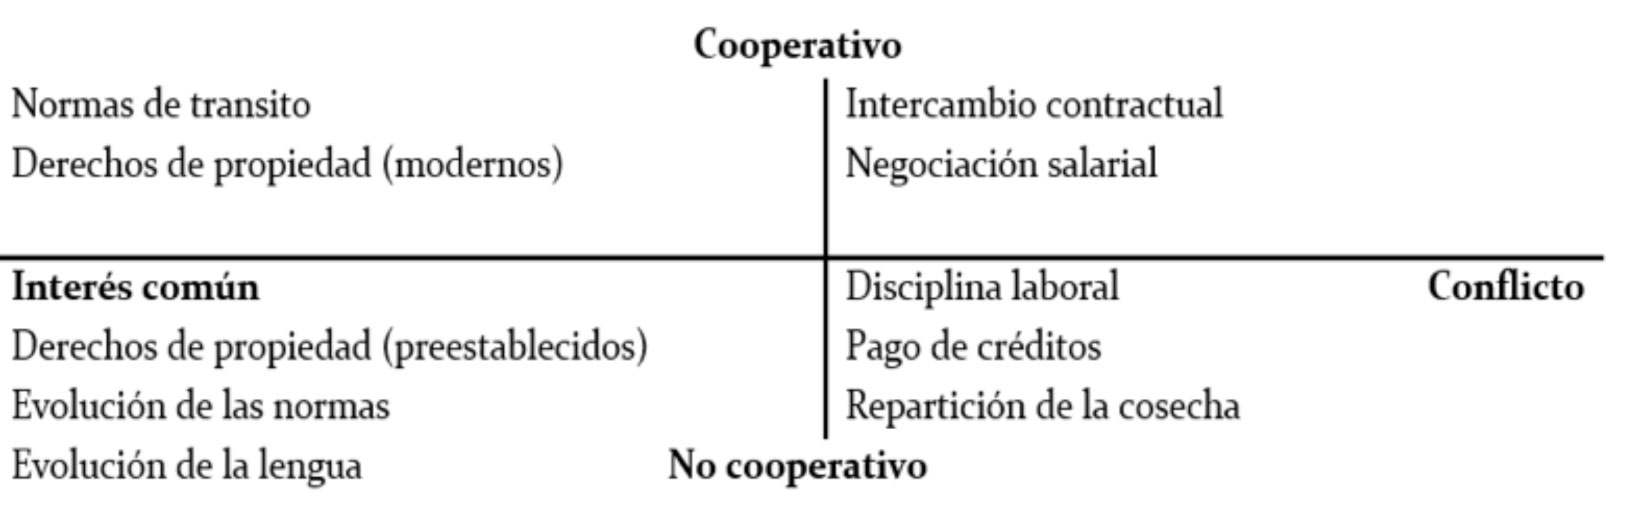 figura2 cooperativo